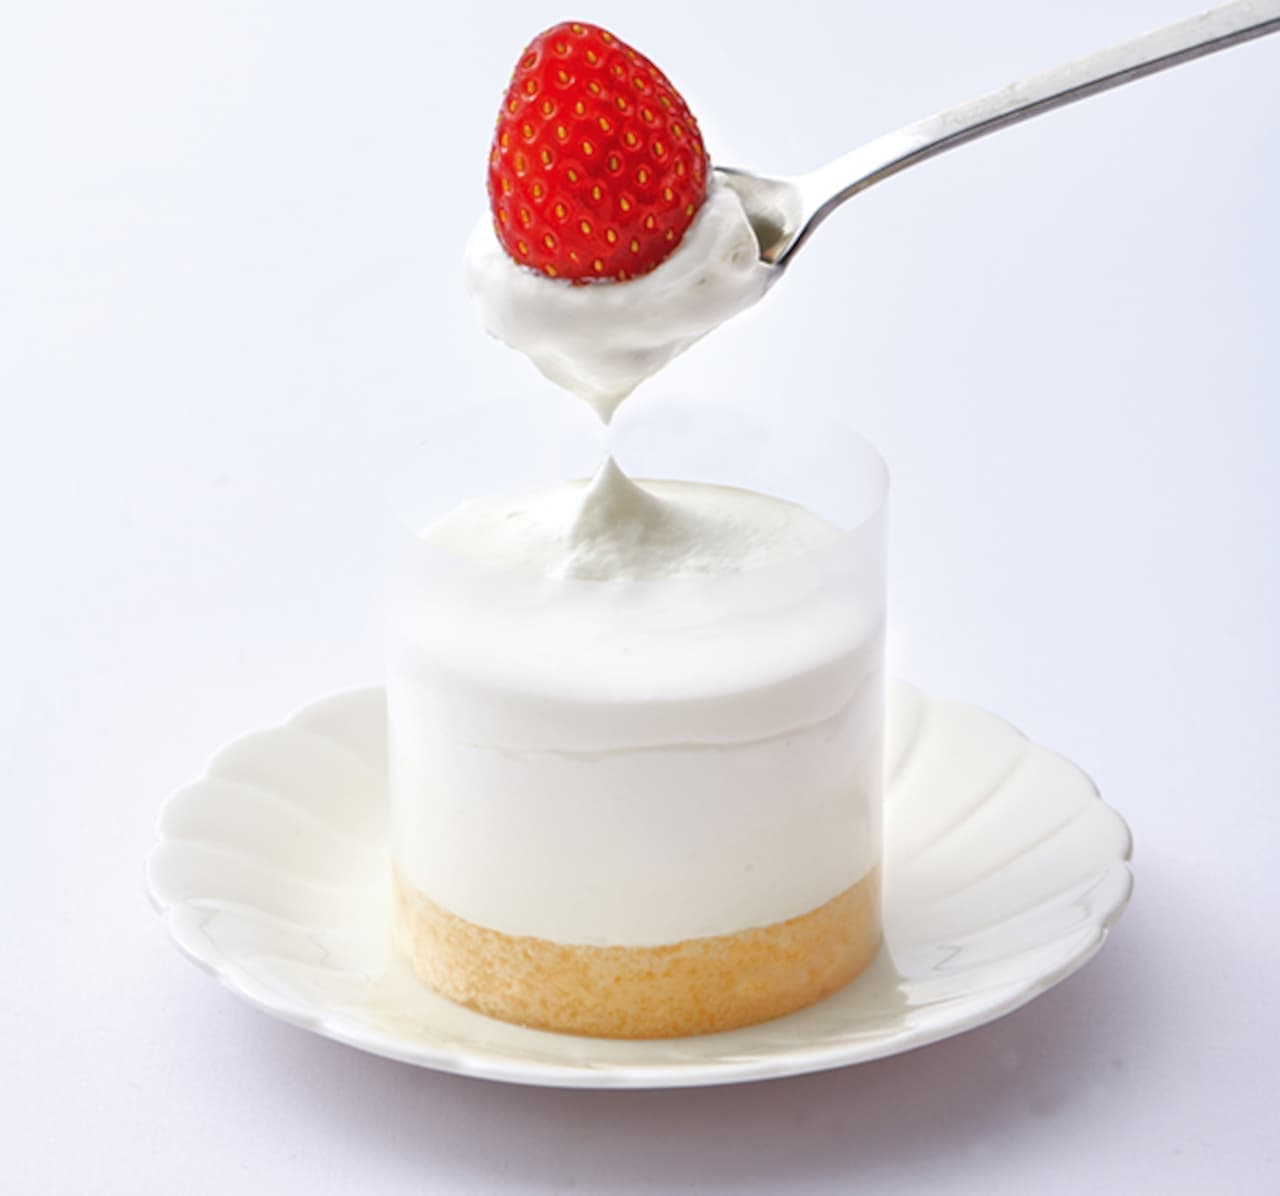 Fujiya Shortcake 100th Anniversary Year